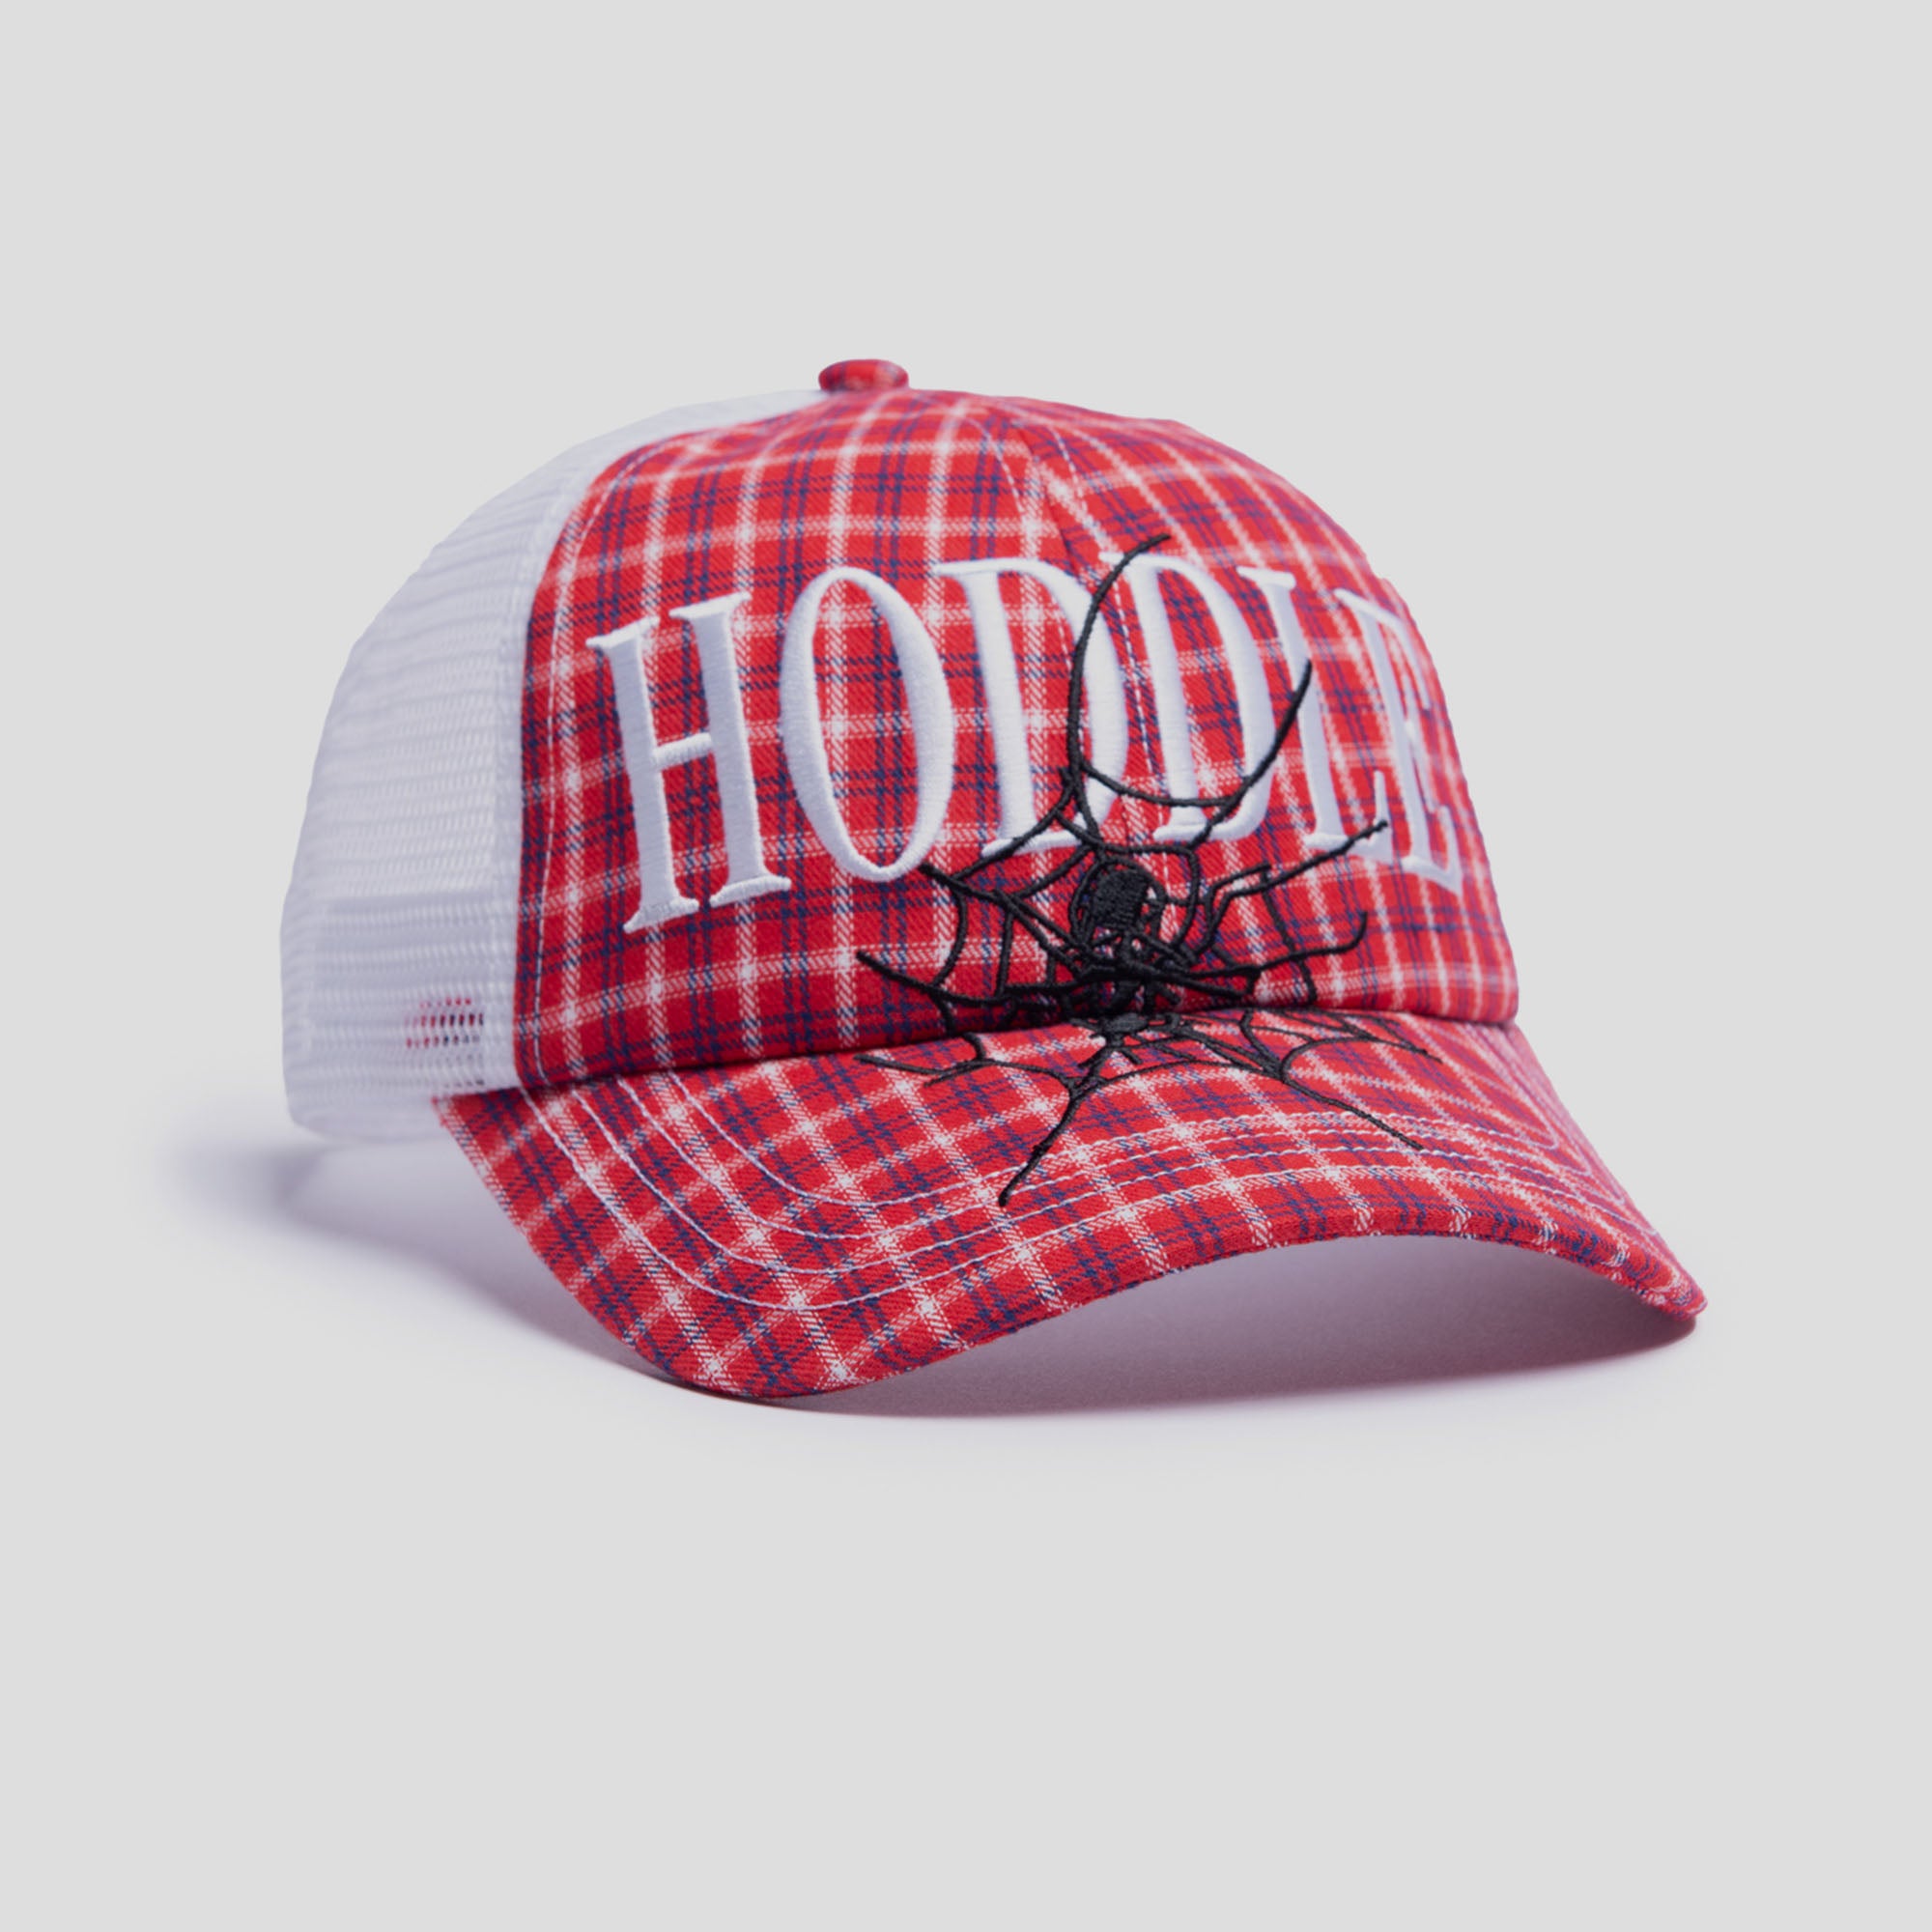 Hoddle Web Trucker Cap - Red / Black